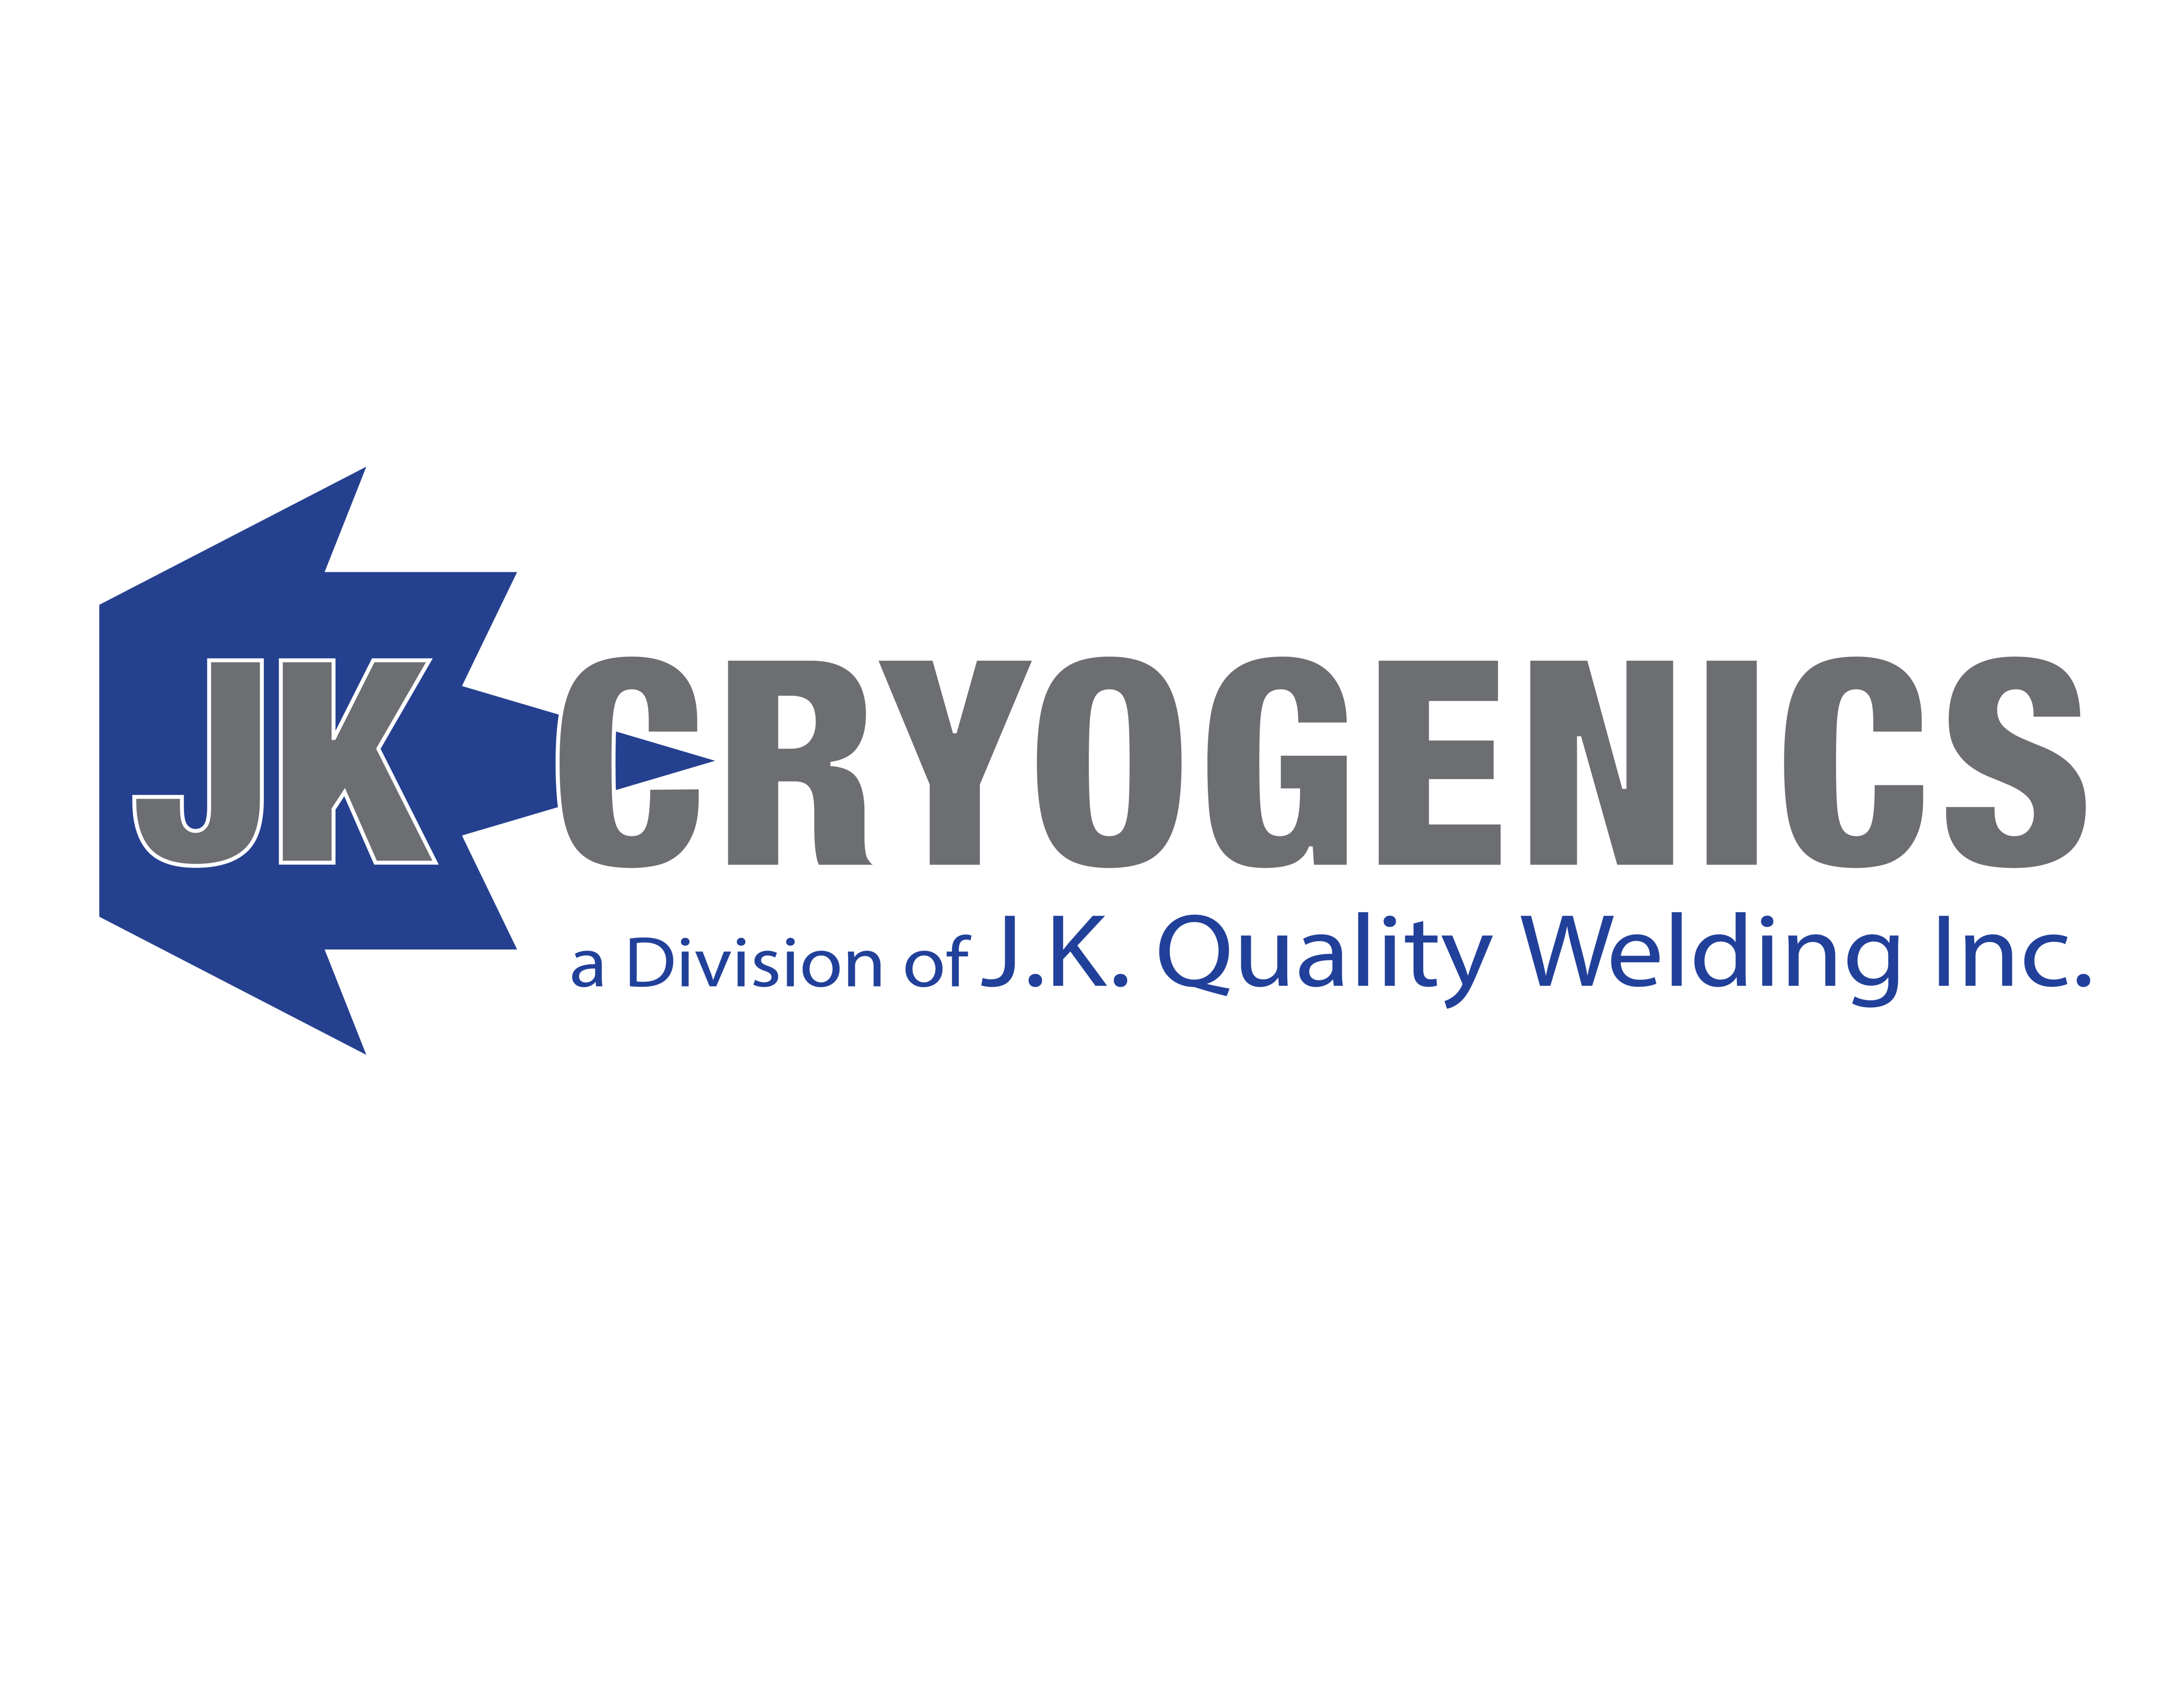 J.K. Cryogenics Inc.